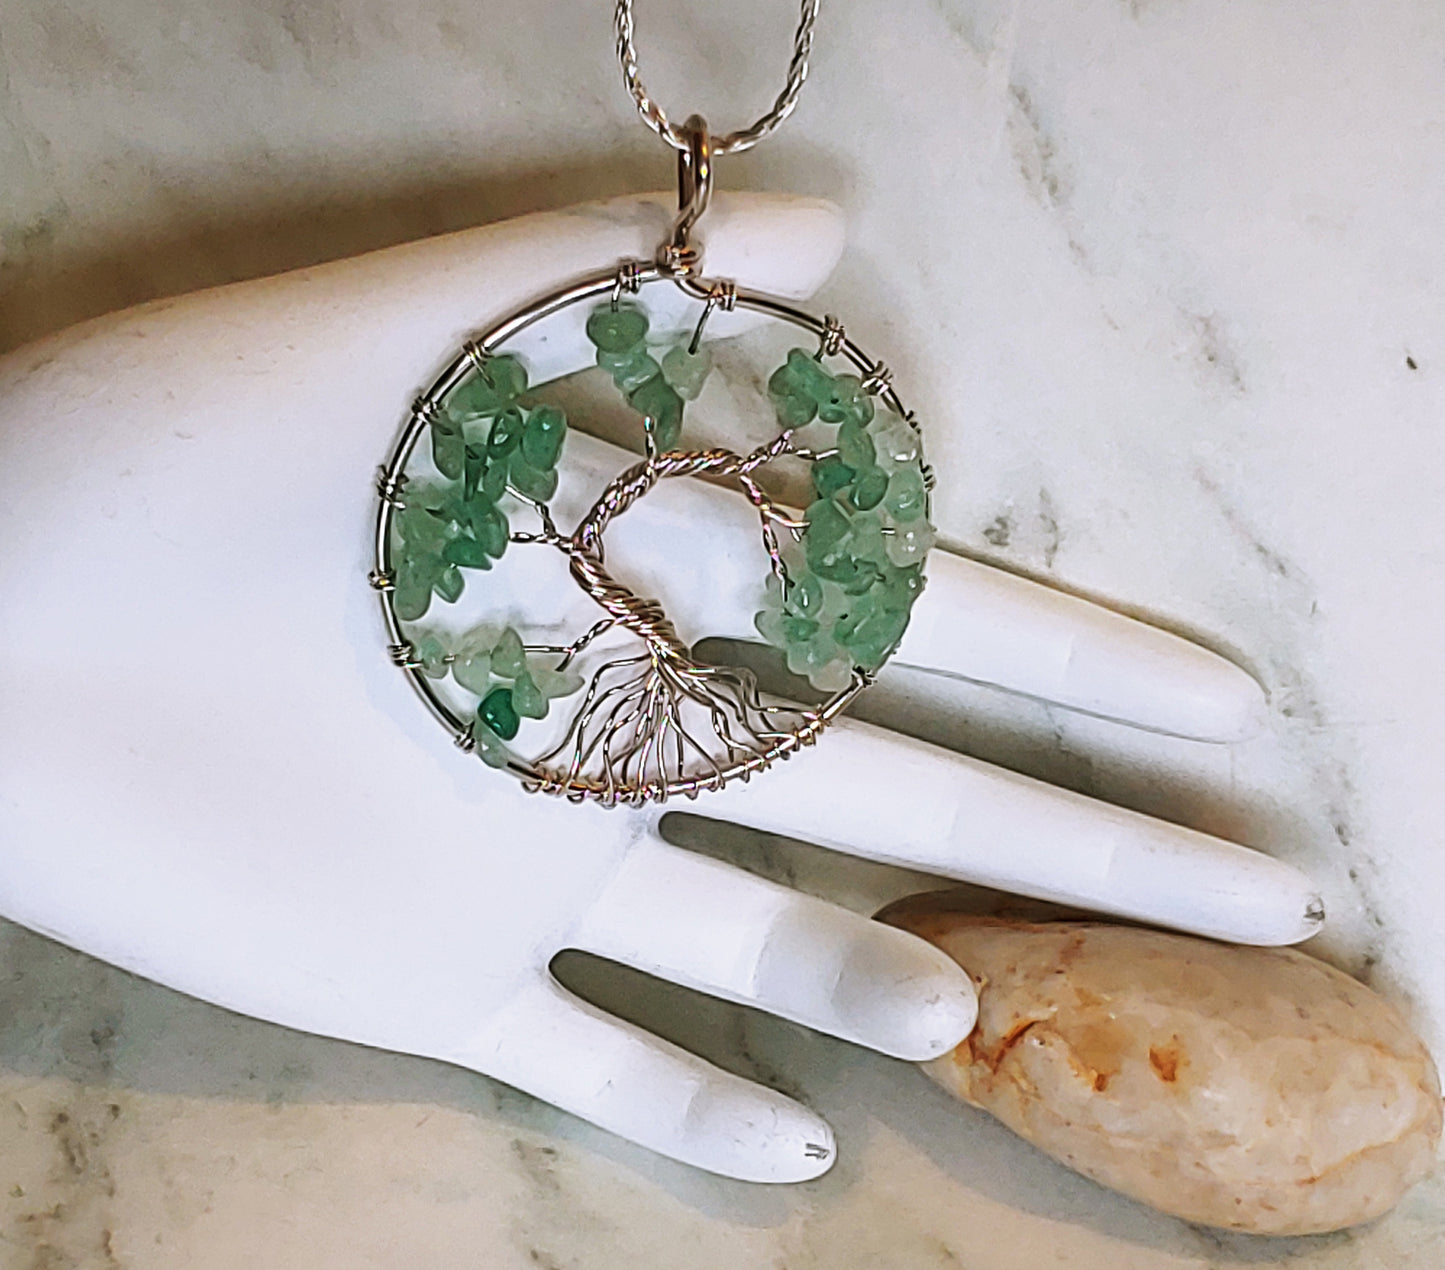 Tree of life pendant necklace with Green Aventurine stones